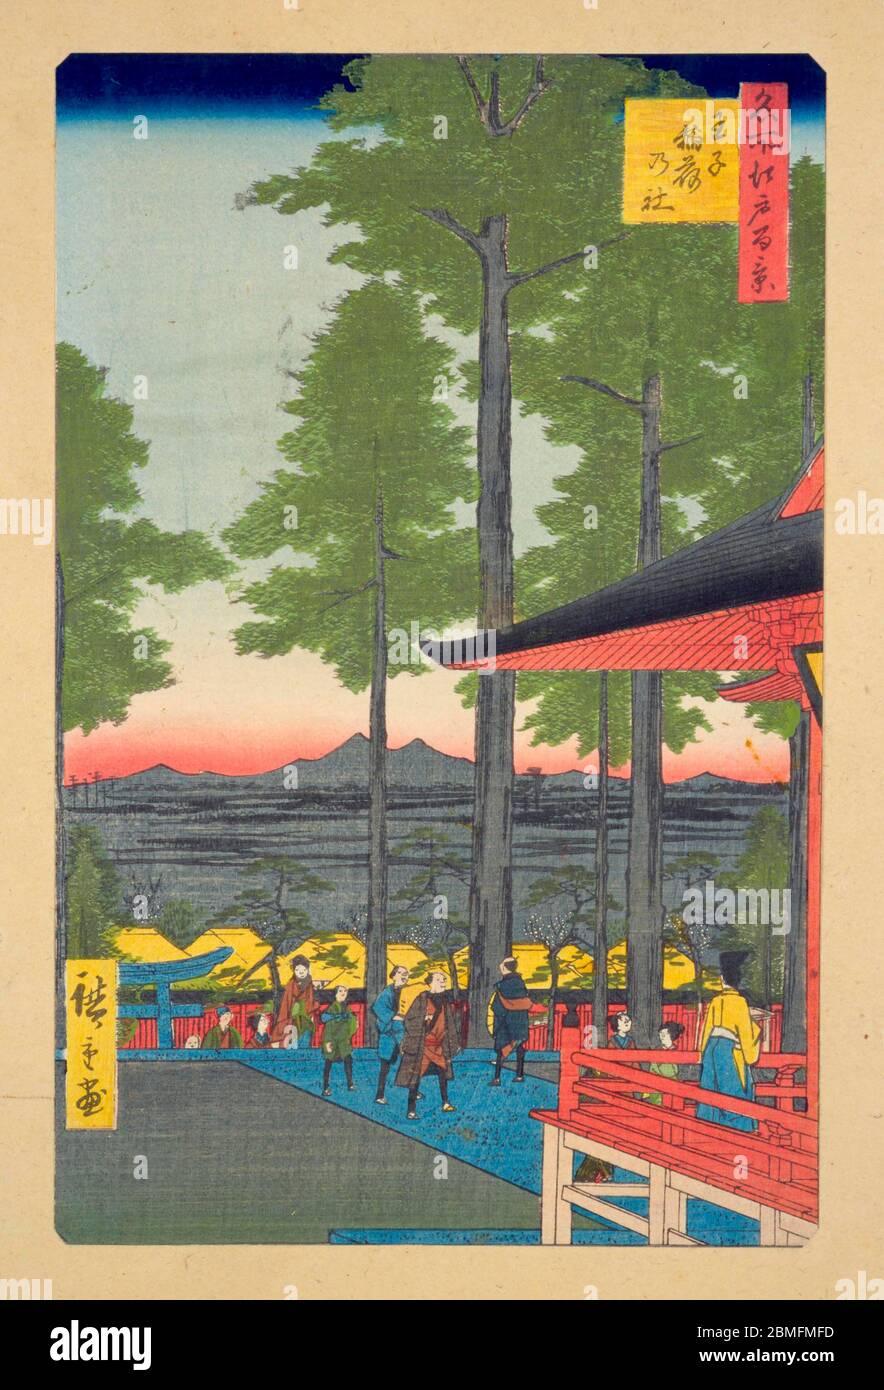 [ 1850s Japan - Edo Shinto Shrine ] —   People visiting Oji Inari Shrine in Edo (current Tokyo), 1857 (Ansei 4). In the distance, Mount Tsukuba can be seen.  This woodblock print is image 18 in One Hundred Famous Views of Edo (名所江戸百景, Meisho Edo Hyakkei), a series created by ukiyoe artist Utagawa Hiroshige (歌川広重, 1797–1858).  It is one of 42 spring scenes in the series.  Title: The Oji Inari Shrine (王子稲荷の社, Oji Inari no yashiro)  19th century vintage Ukiyoe woodblock print. Stock Photo